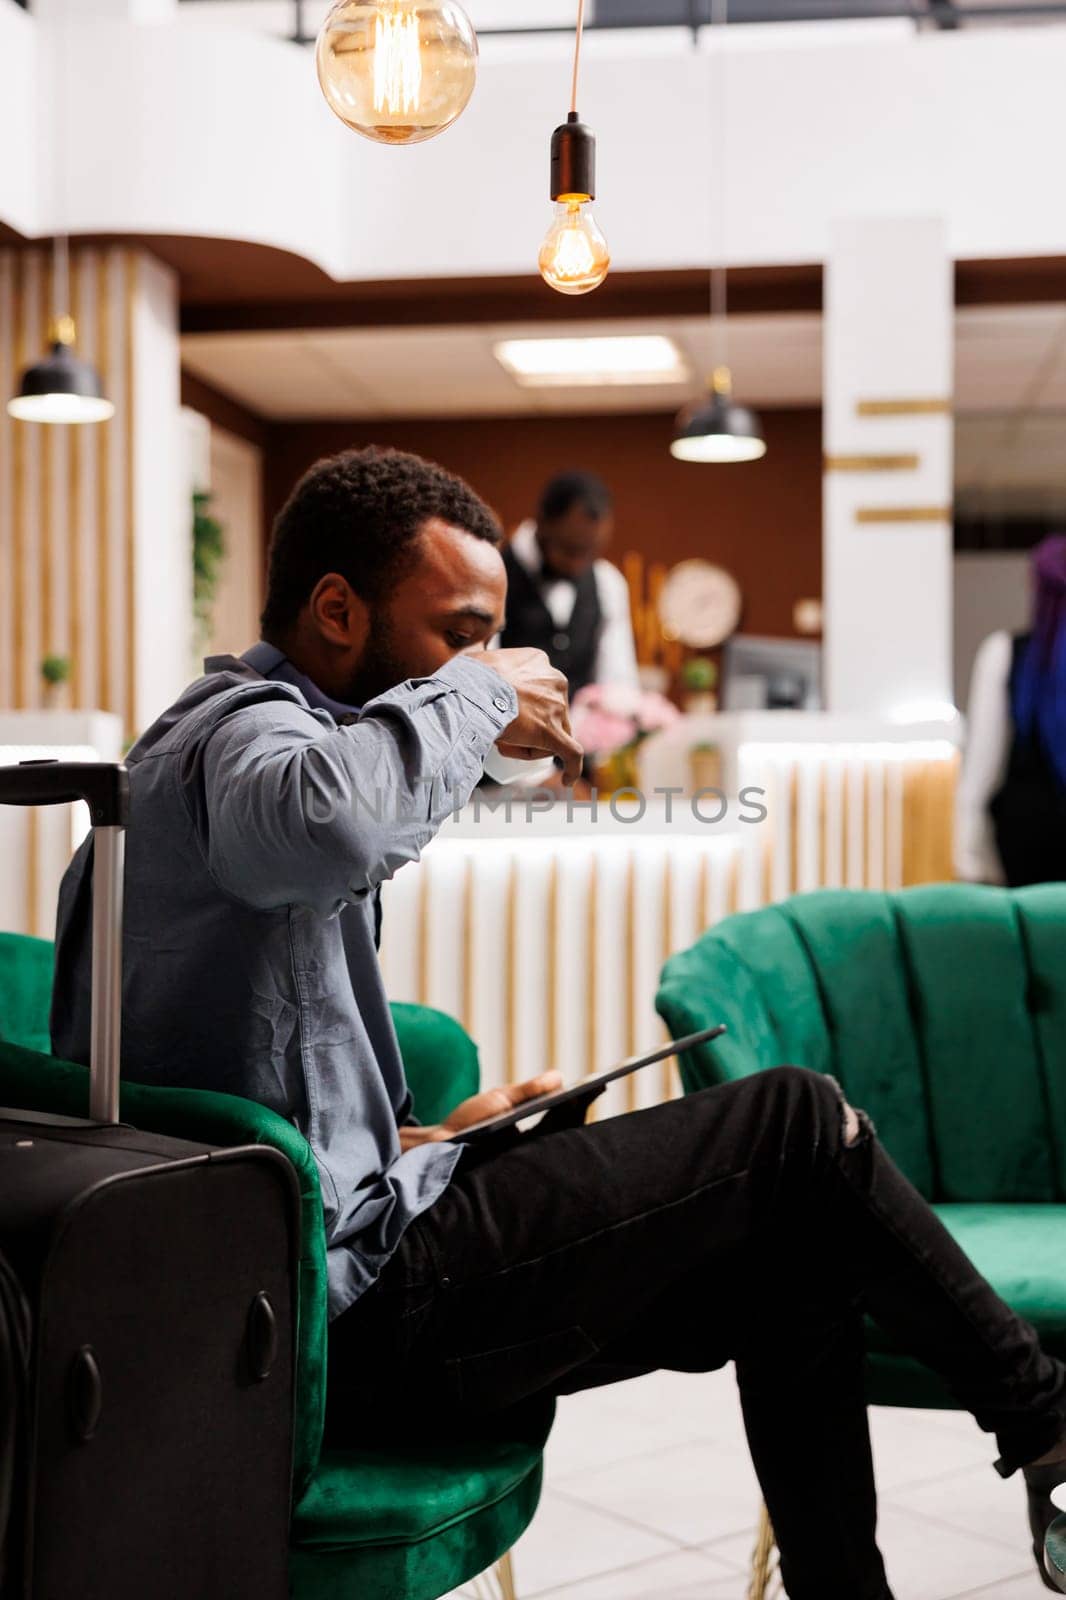 Businessman drinks coffee in hotel lobby by DCStudio